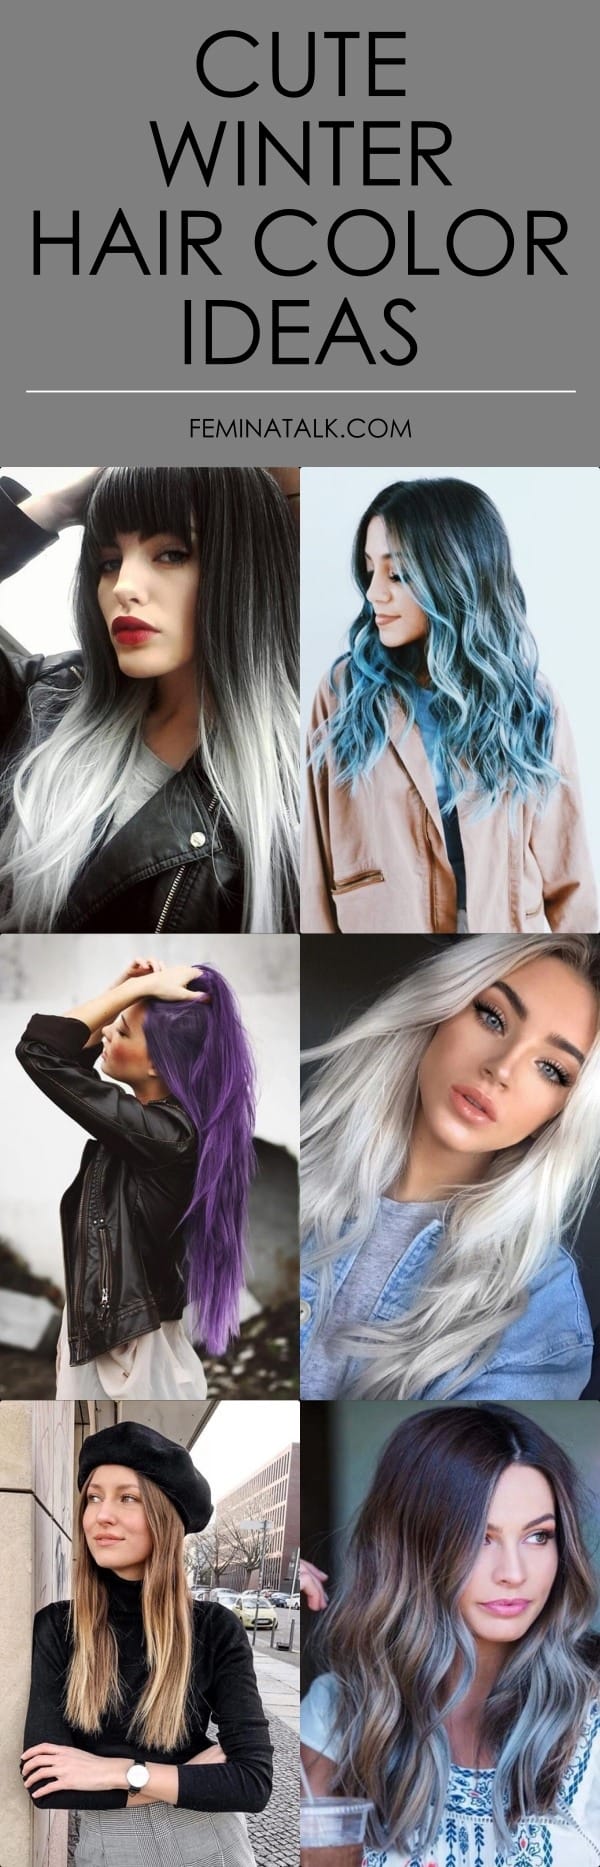 40 Cute Winter Hair Color Ideas To Copy In 2019 Feminatalk